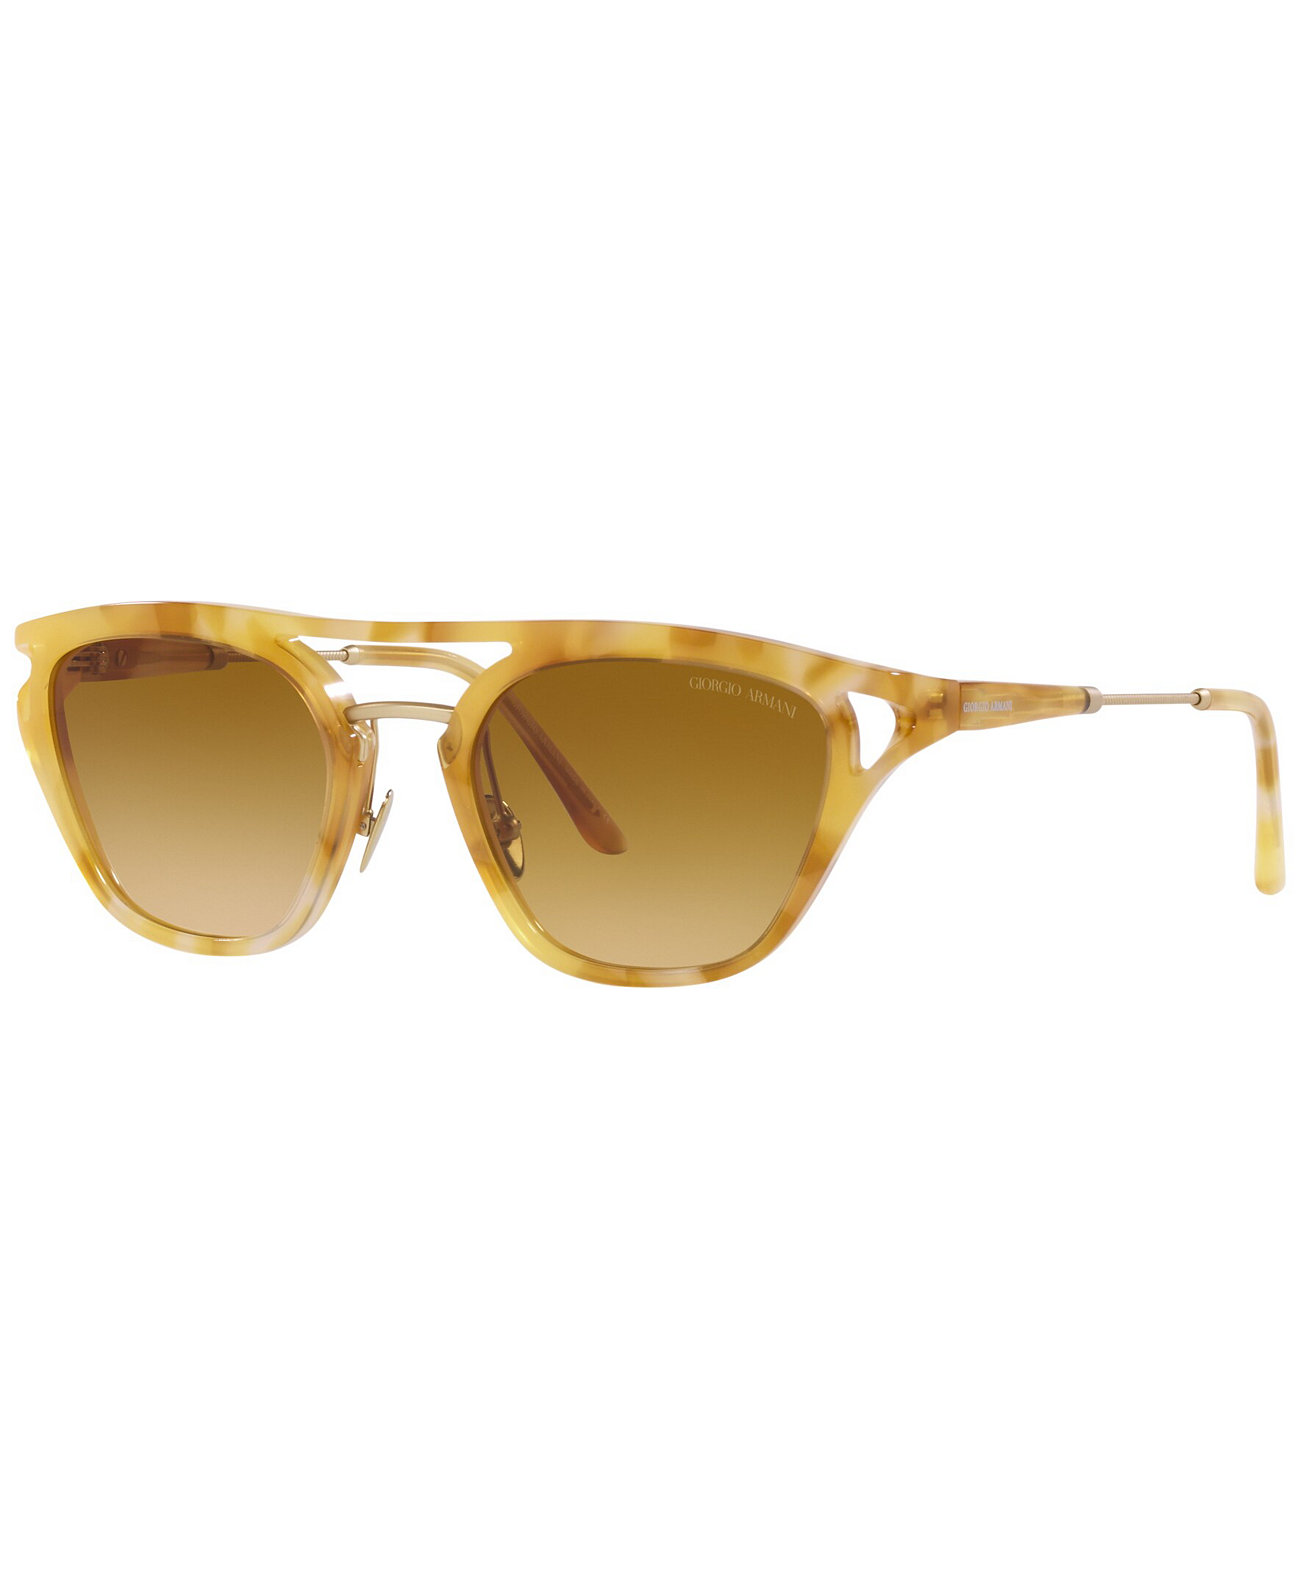 Мужские солнцезащитные очки, AR8158 51 Giorgio Armani